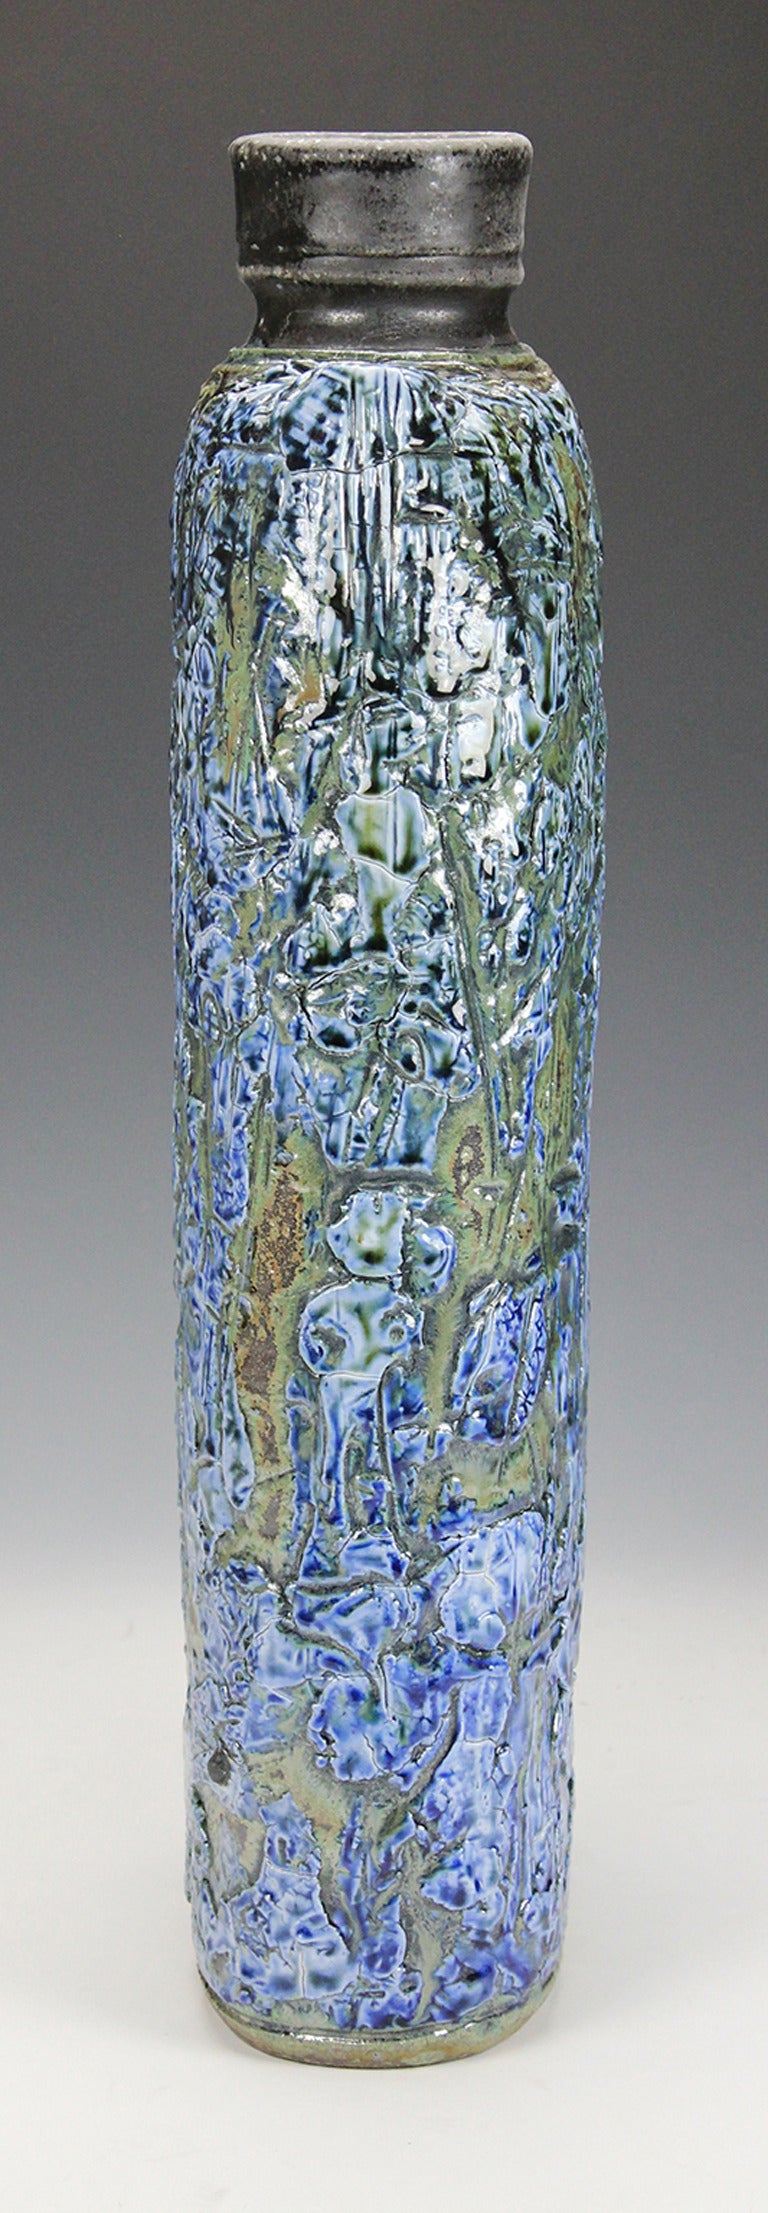 Blue Green Form - Sculpture by Regis Brodie